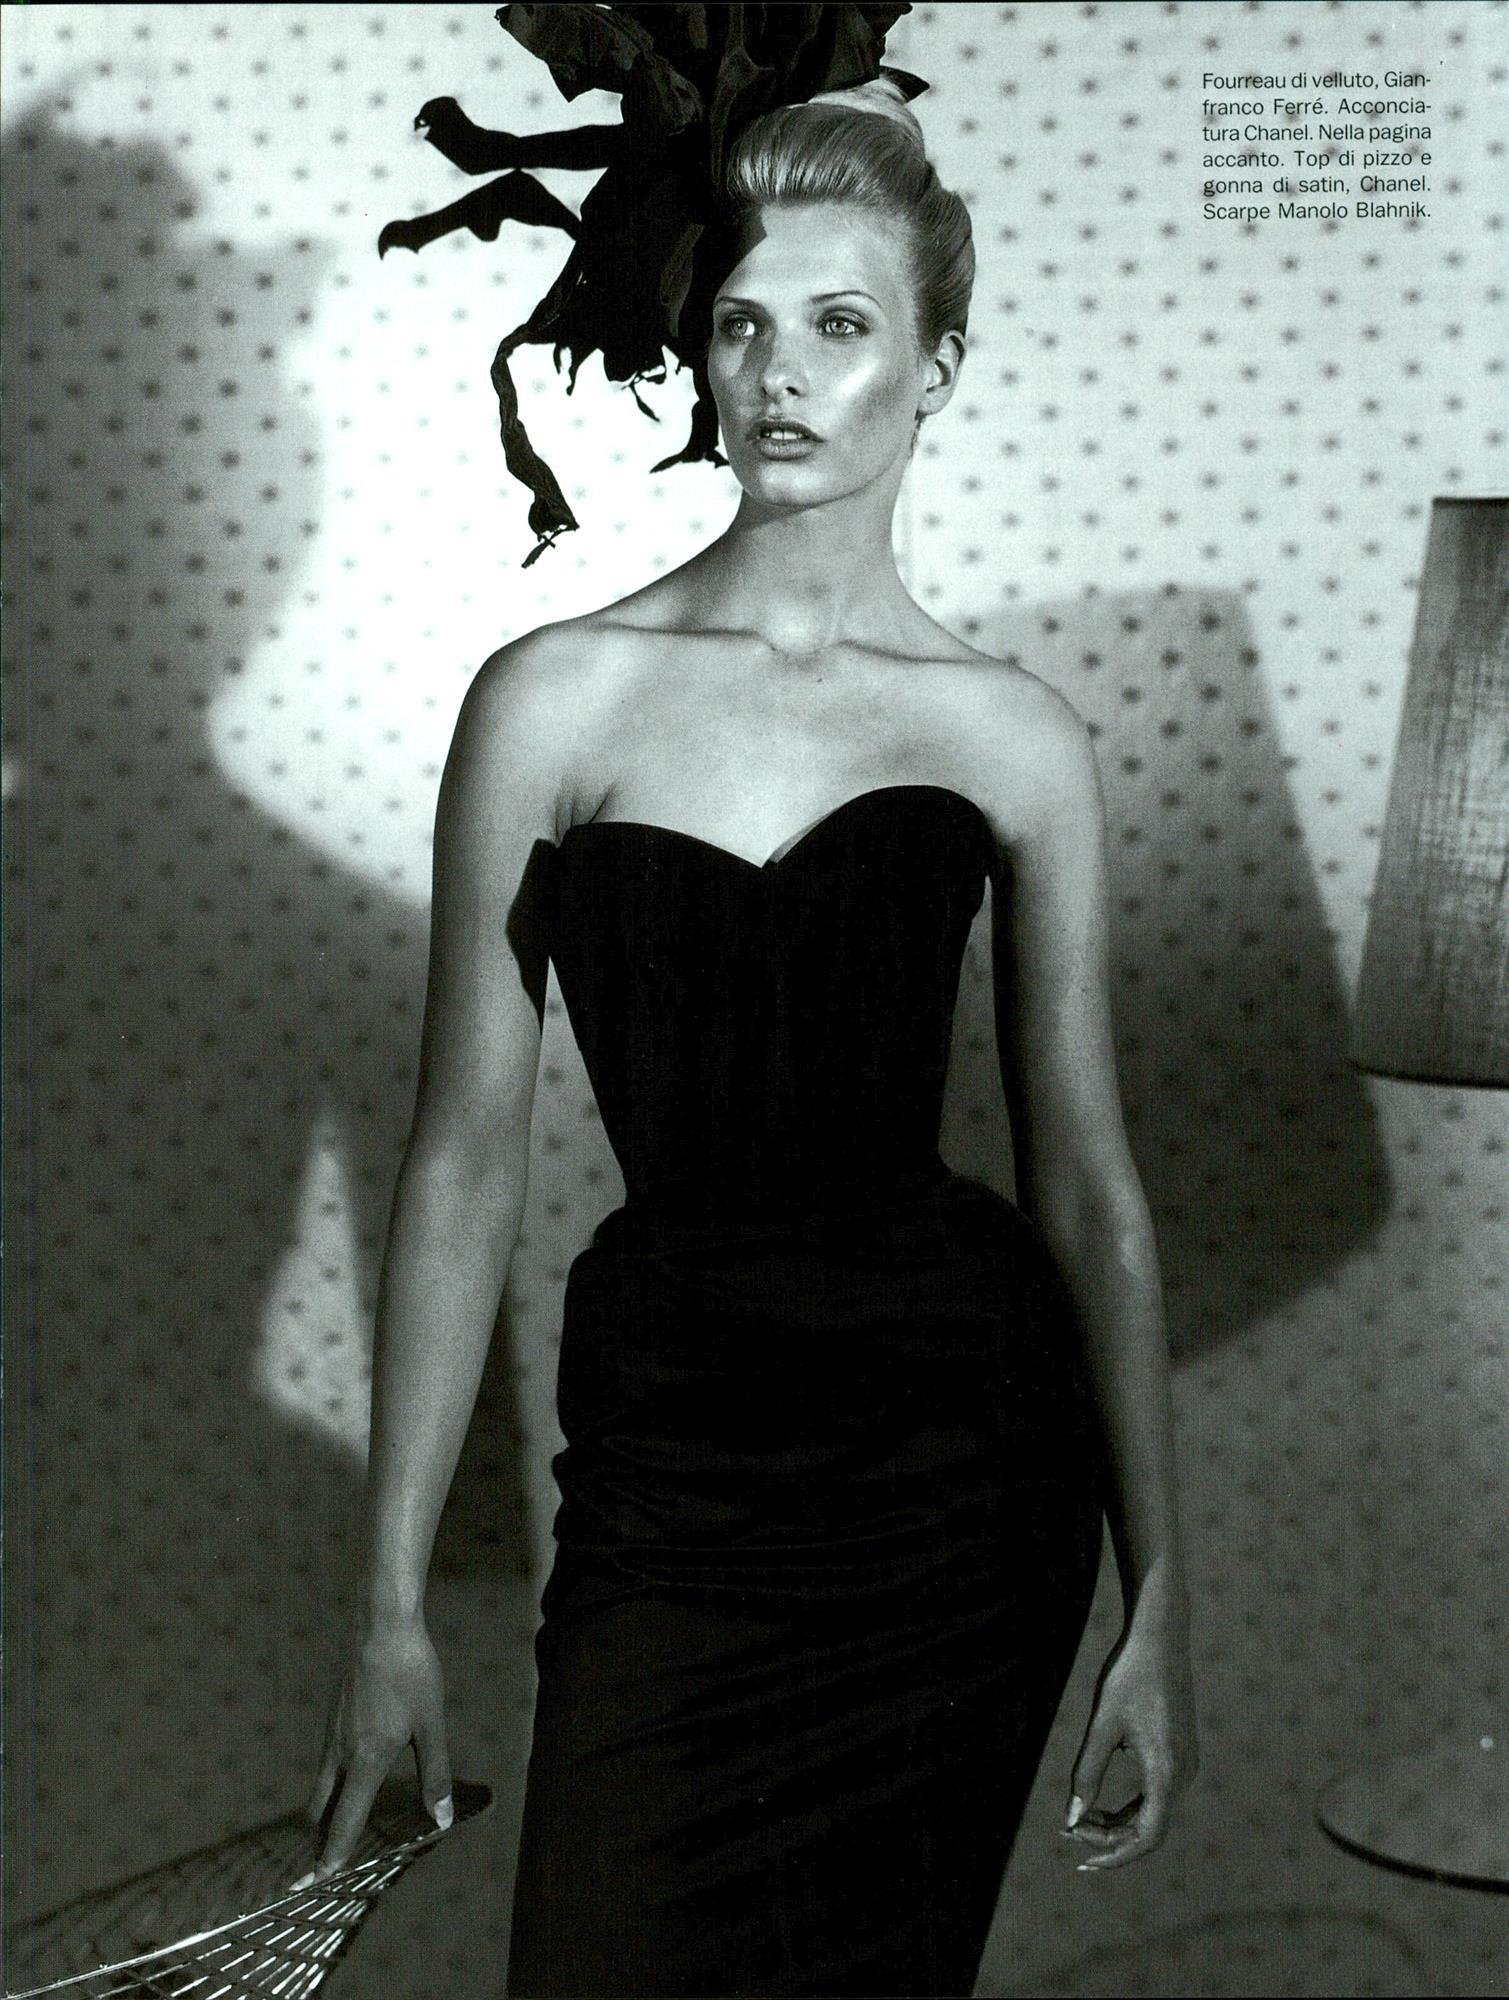 Steven-Meisel-Mood-of-Black-Vogue-Itali9a-540-August-1995-10.jpeg